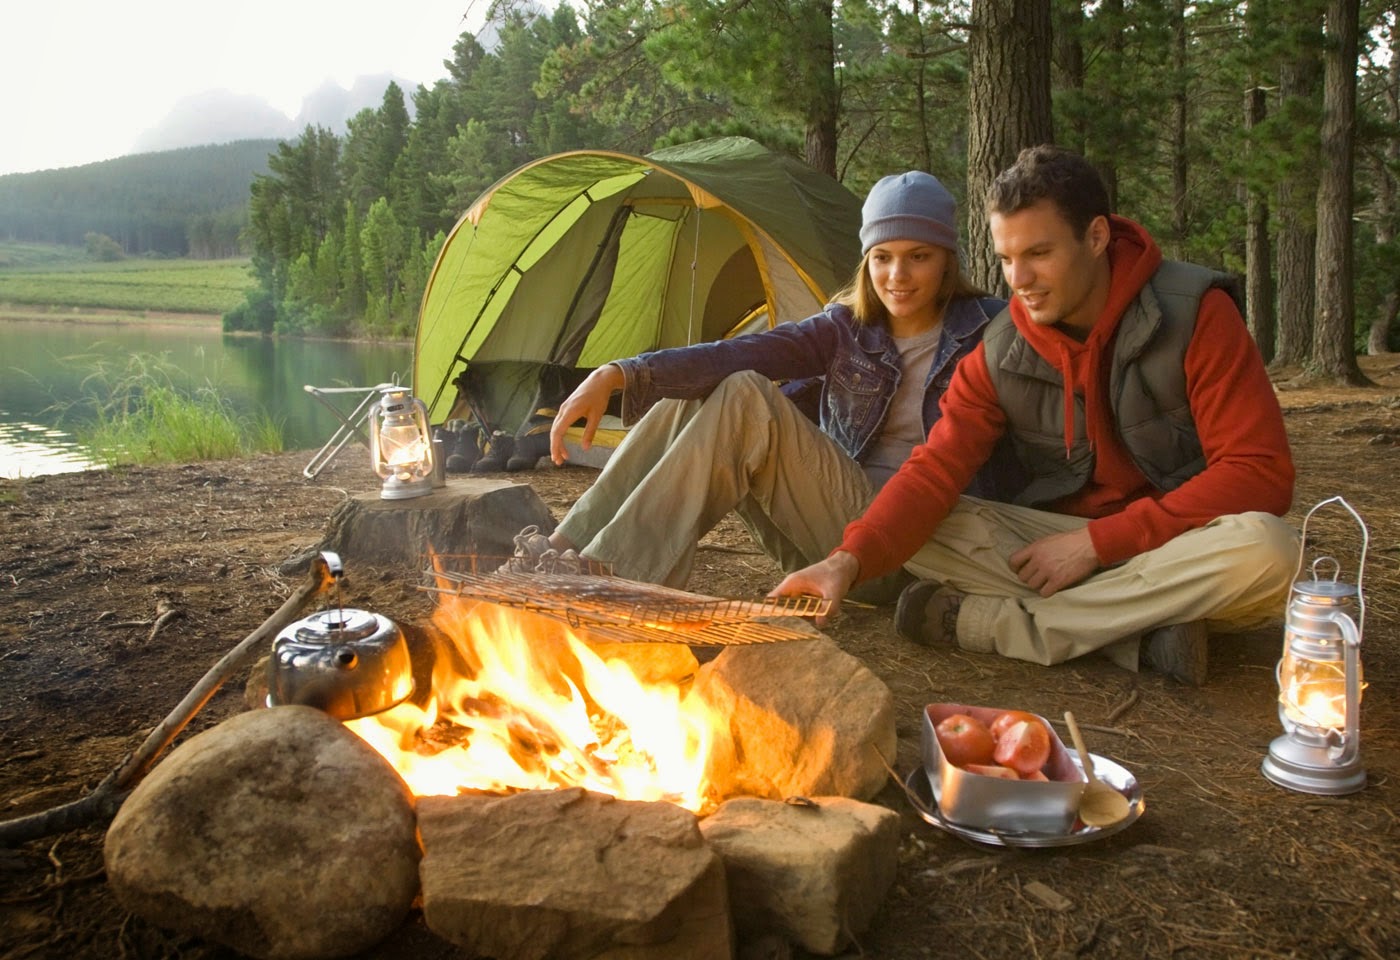 https://www.fiverr.com/ebayusa/deliver-35-camping-plr-articles